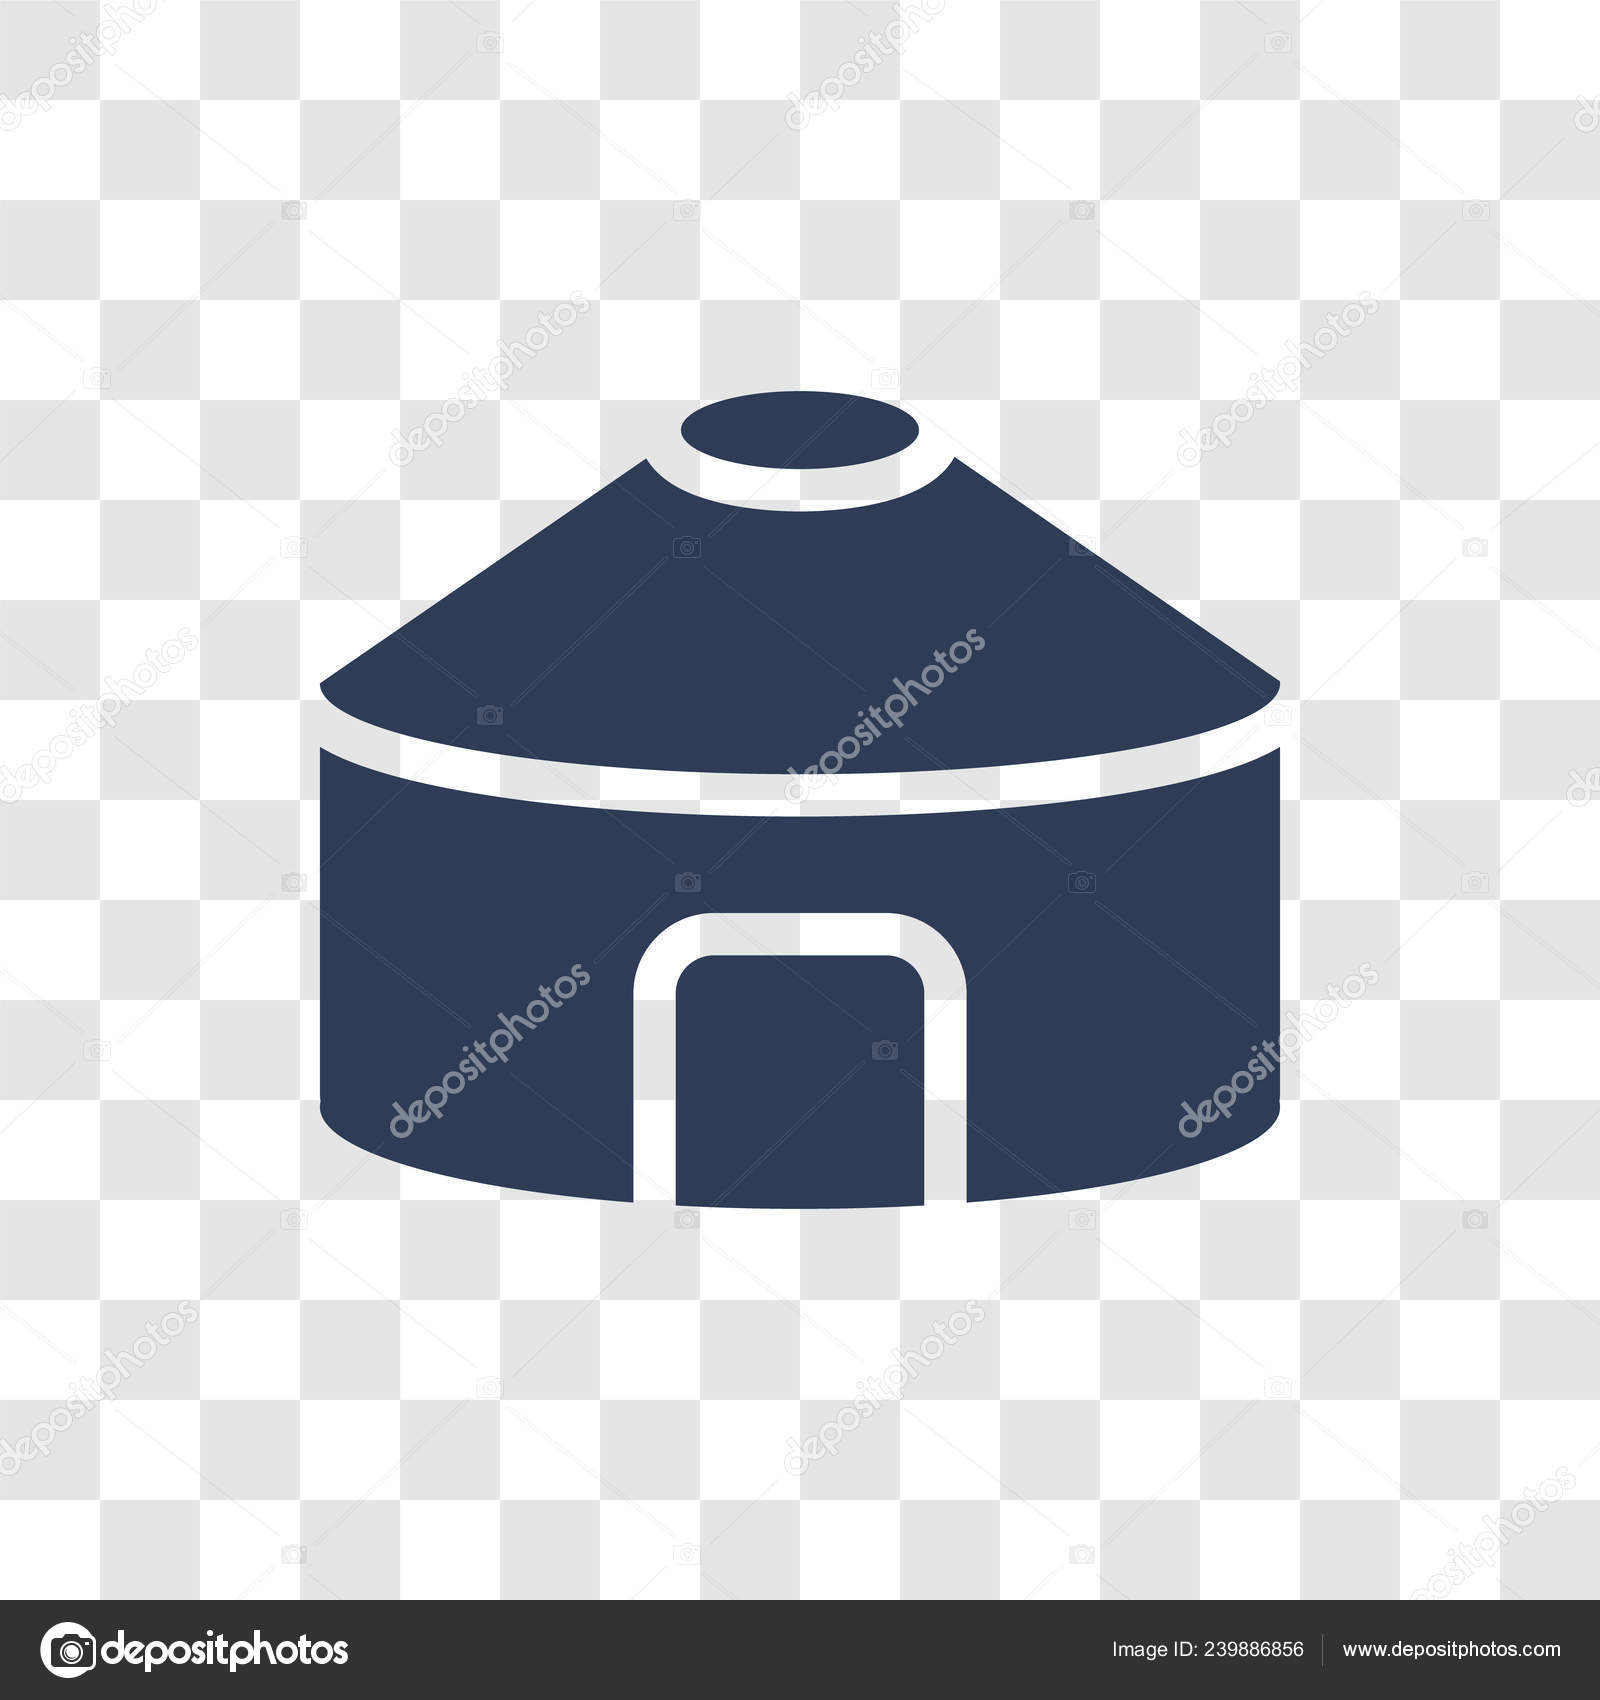 https://st4.depositphotos.com/18664664/23988/v/1600/depositphotos_239886856-stock-illustration-yurt-icon-trendy-yurt-logo.jpg